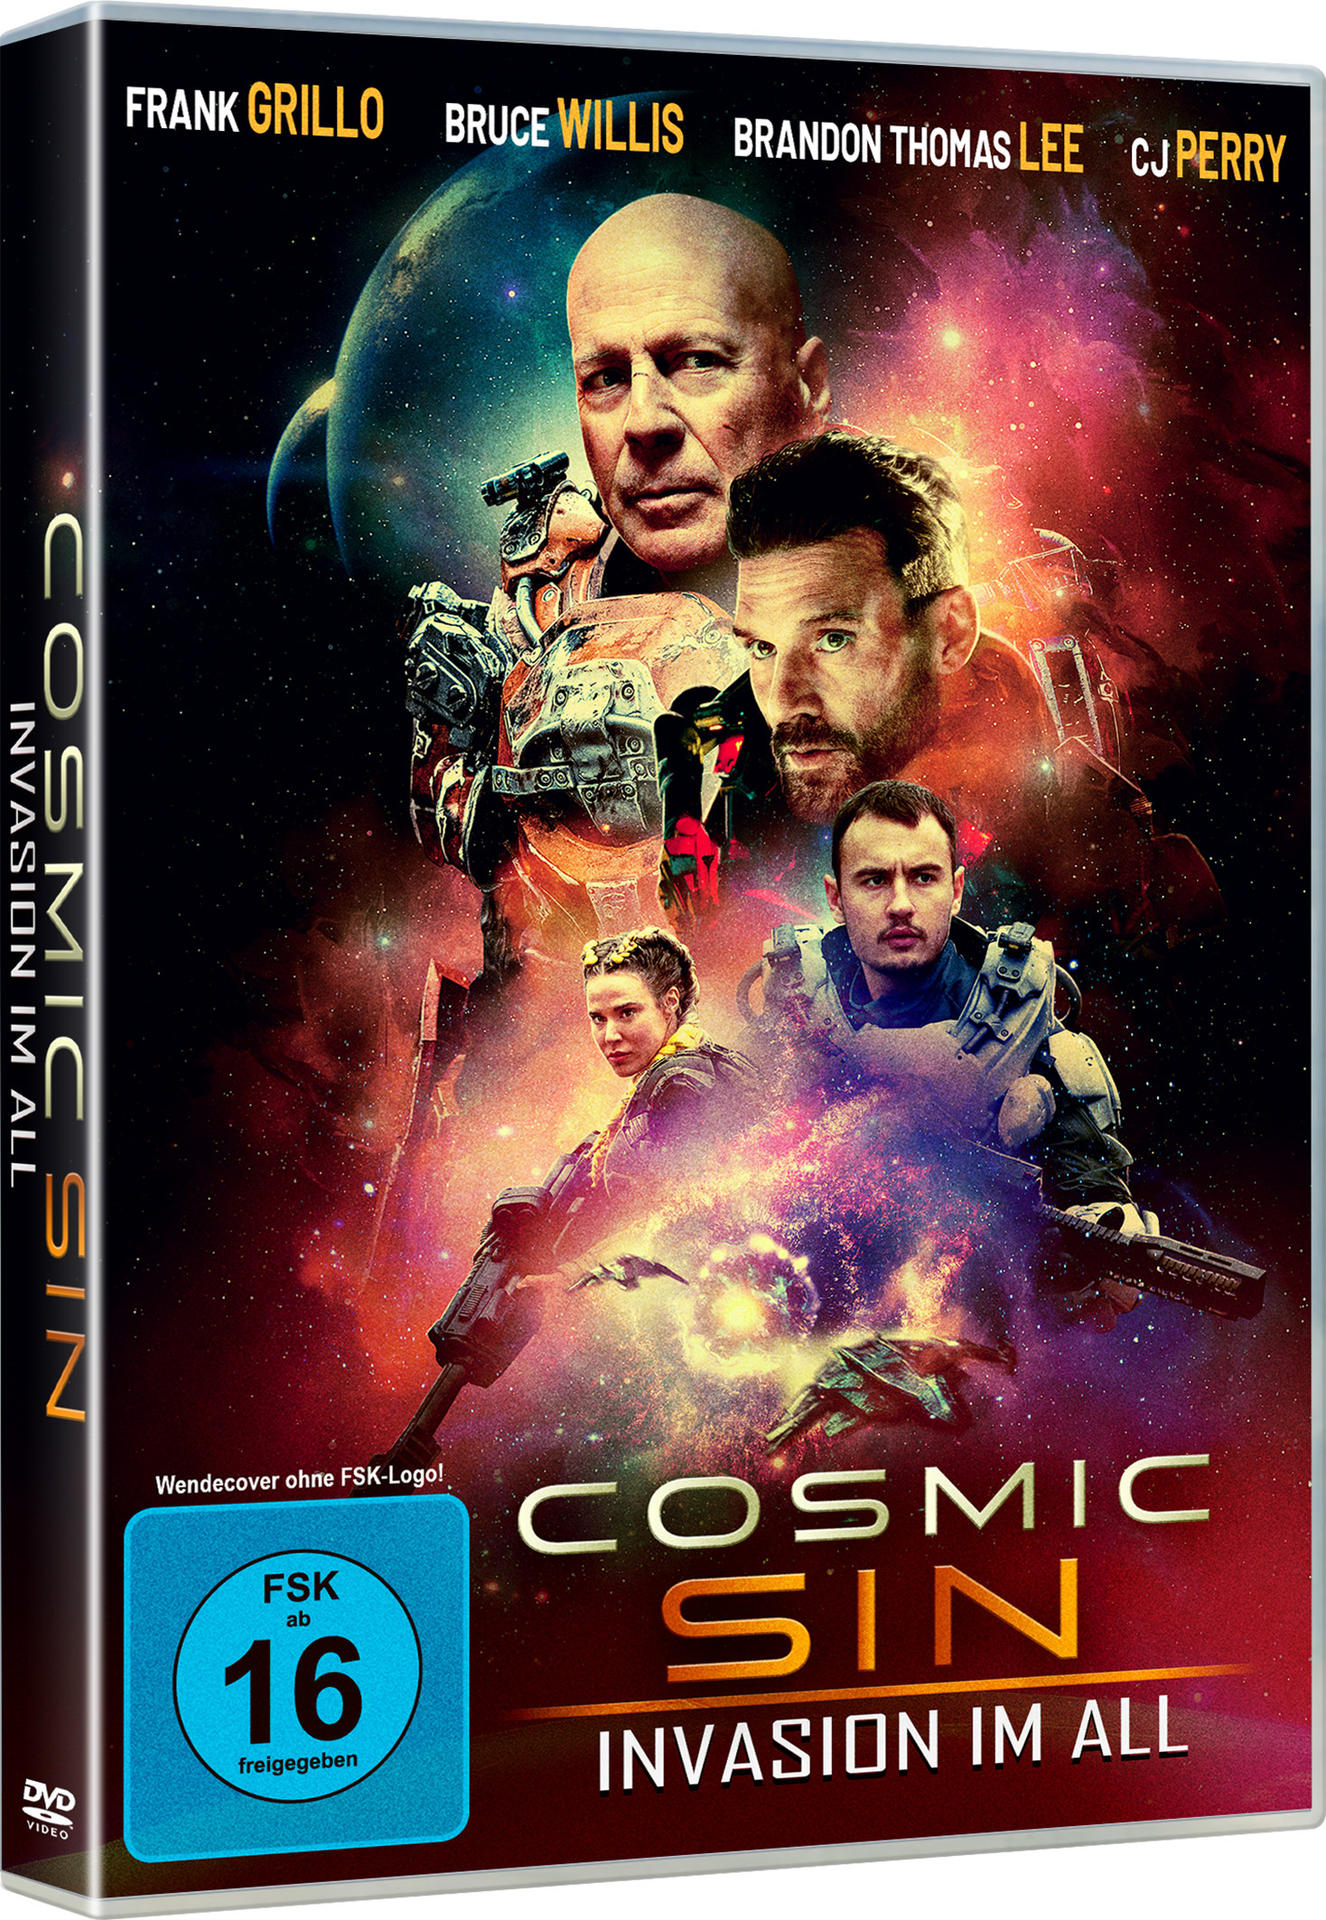 Cosmic Sin - Invasion All im DVD